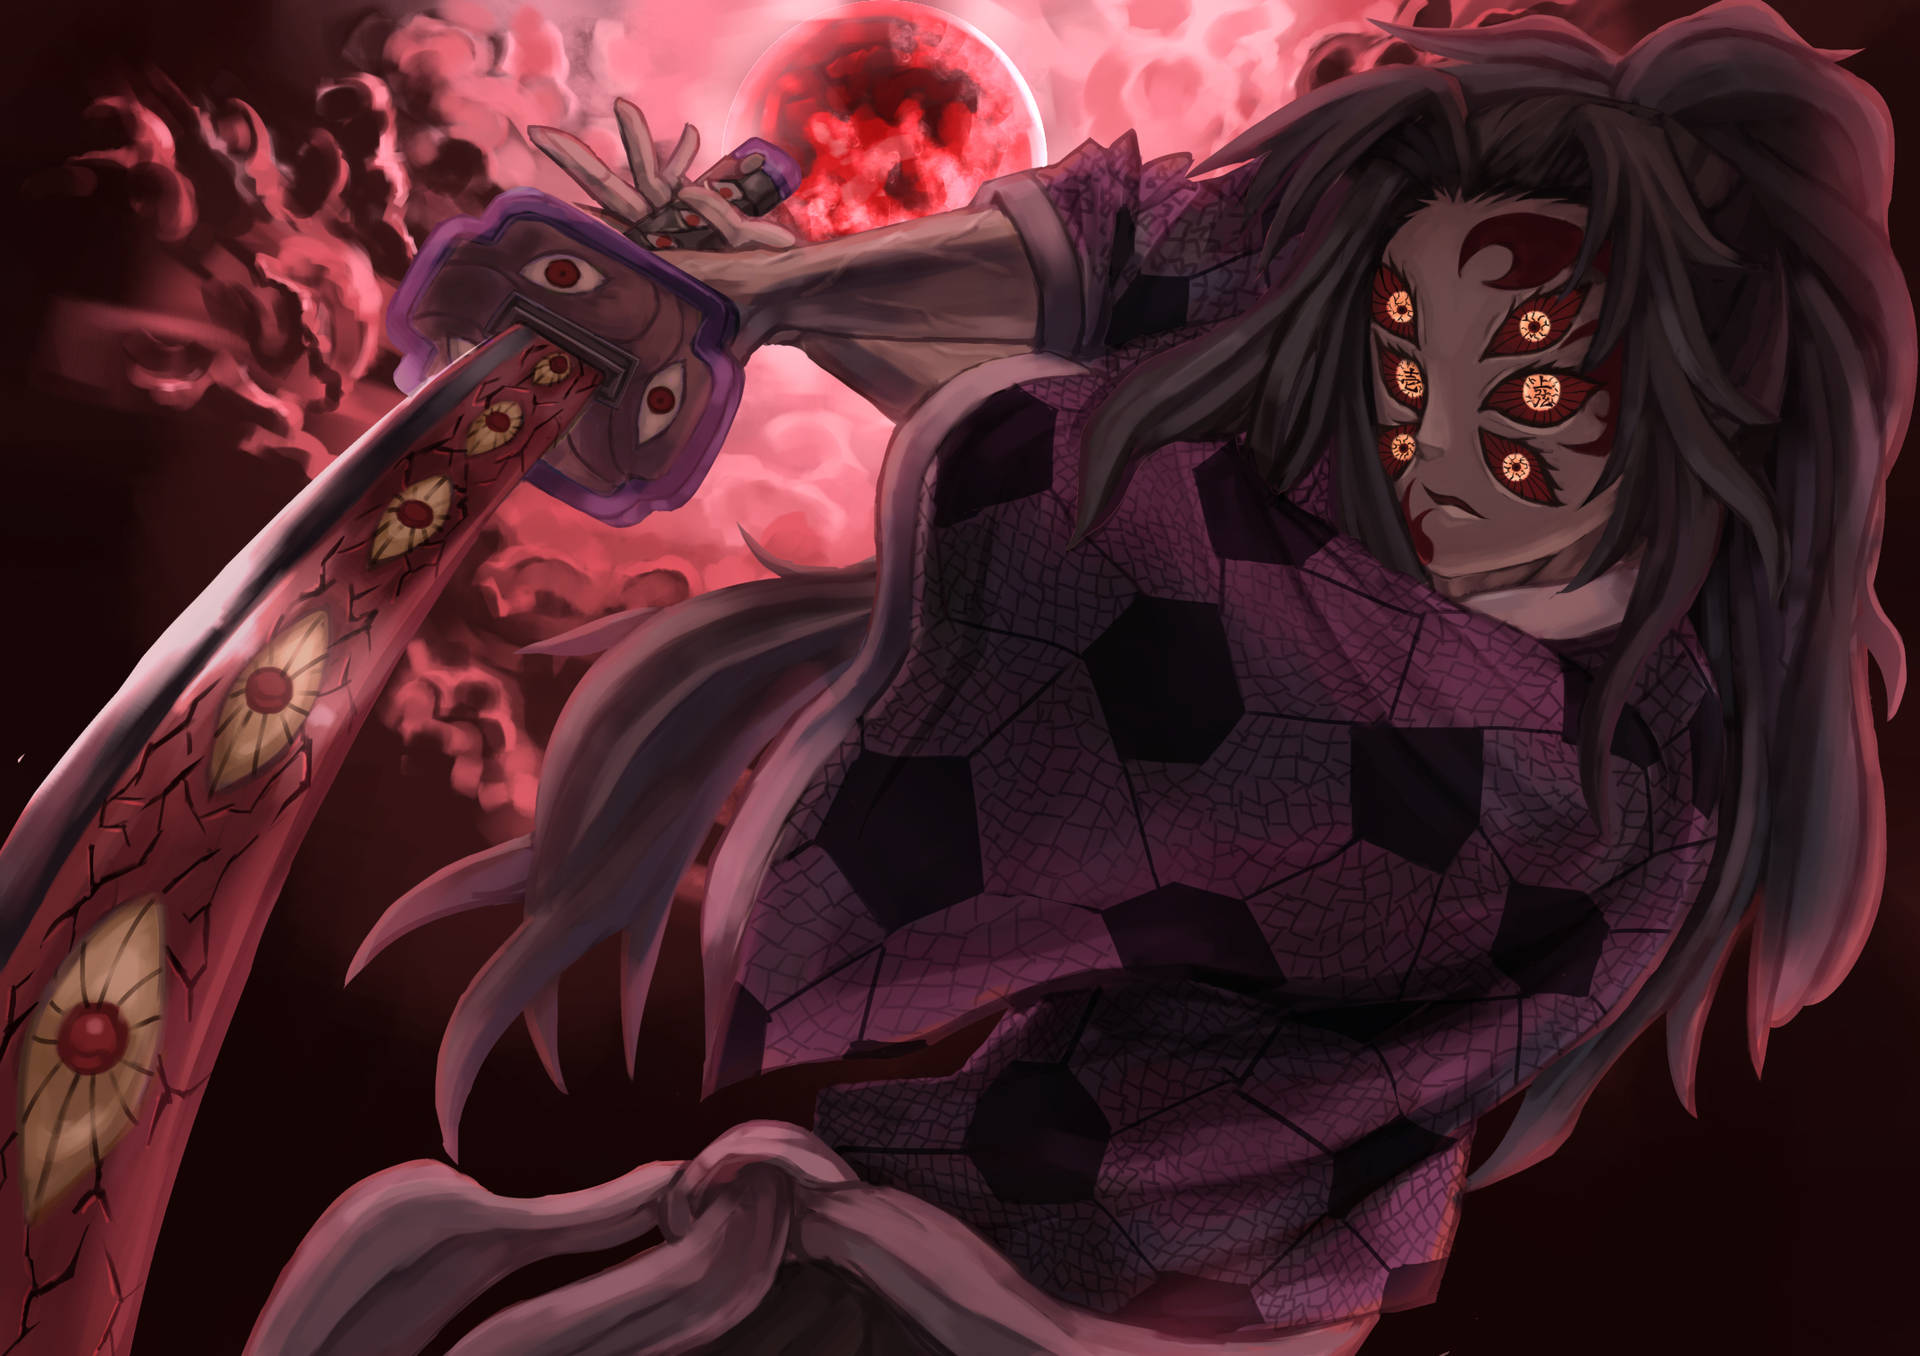 "A Demon Slayer, preparing to battle against the powerful Kokushibo." Wallpaper